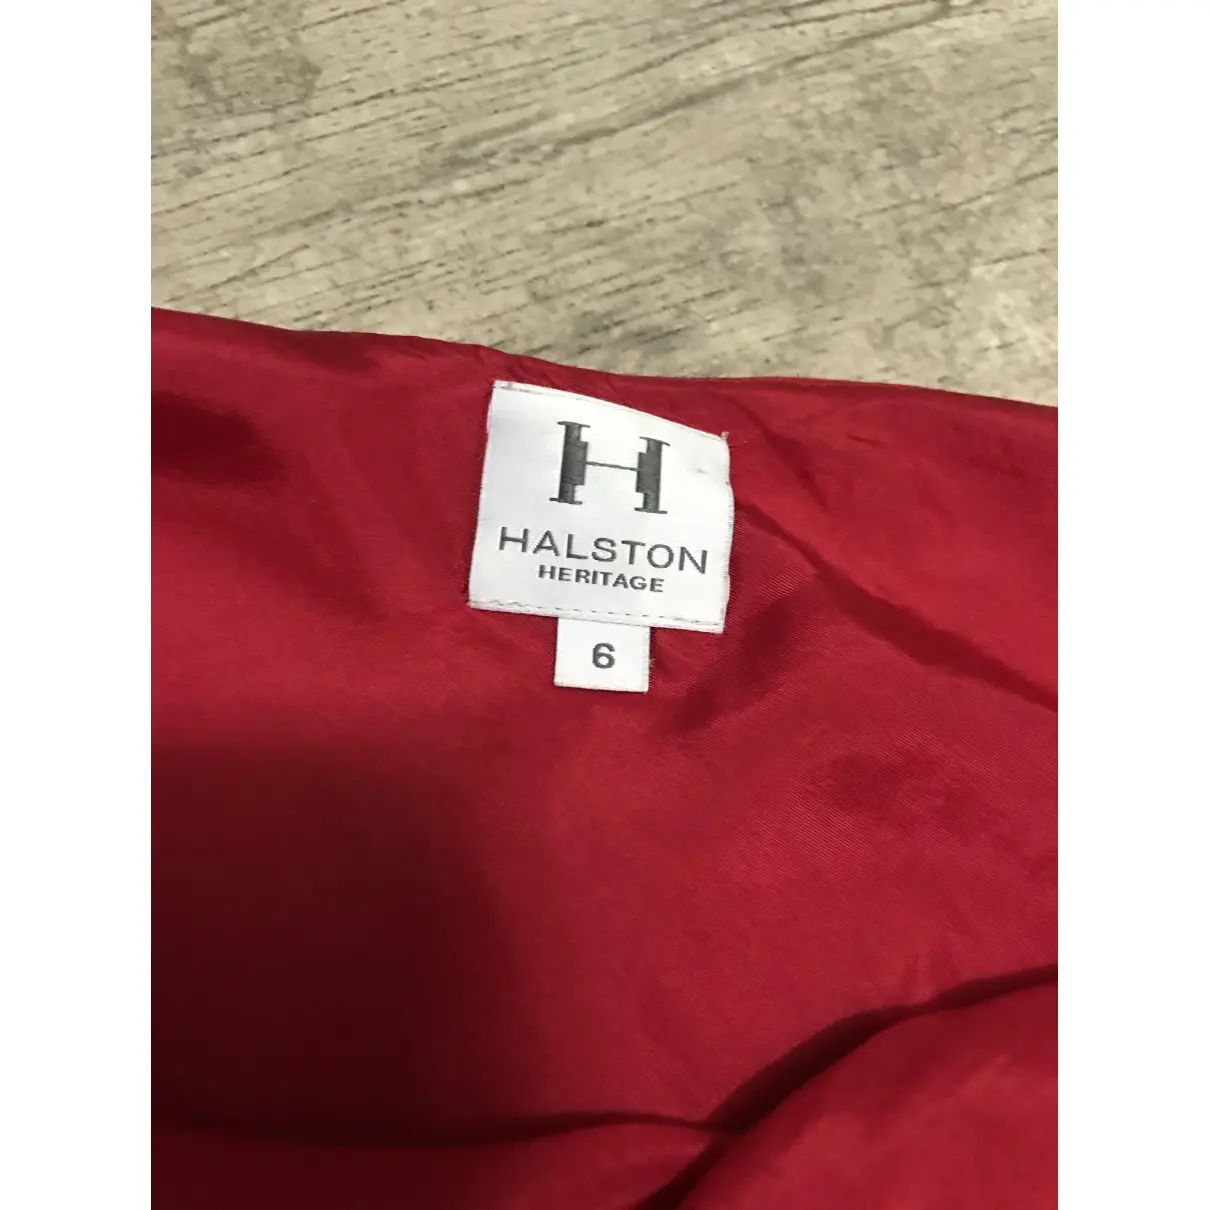 Halston Heritage Silk top for sale